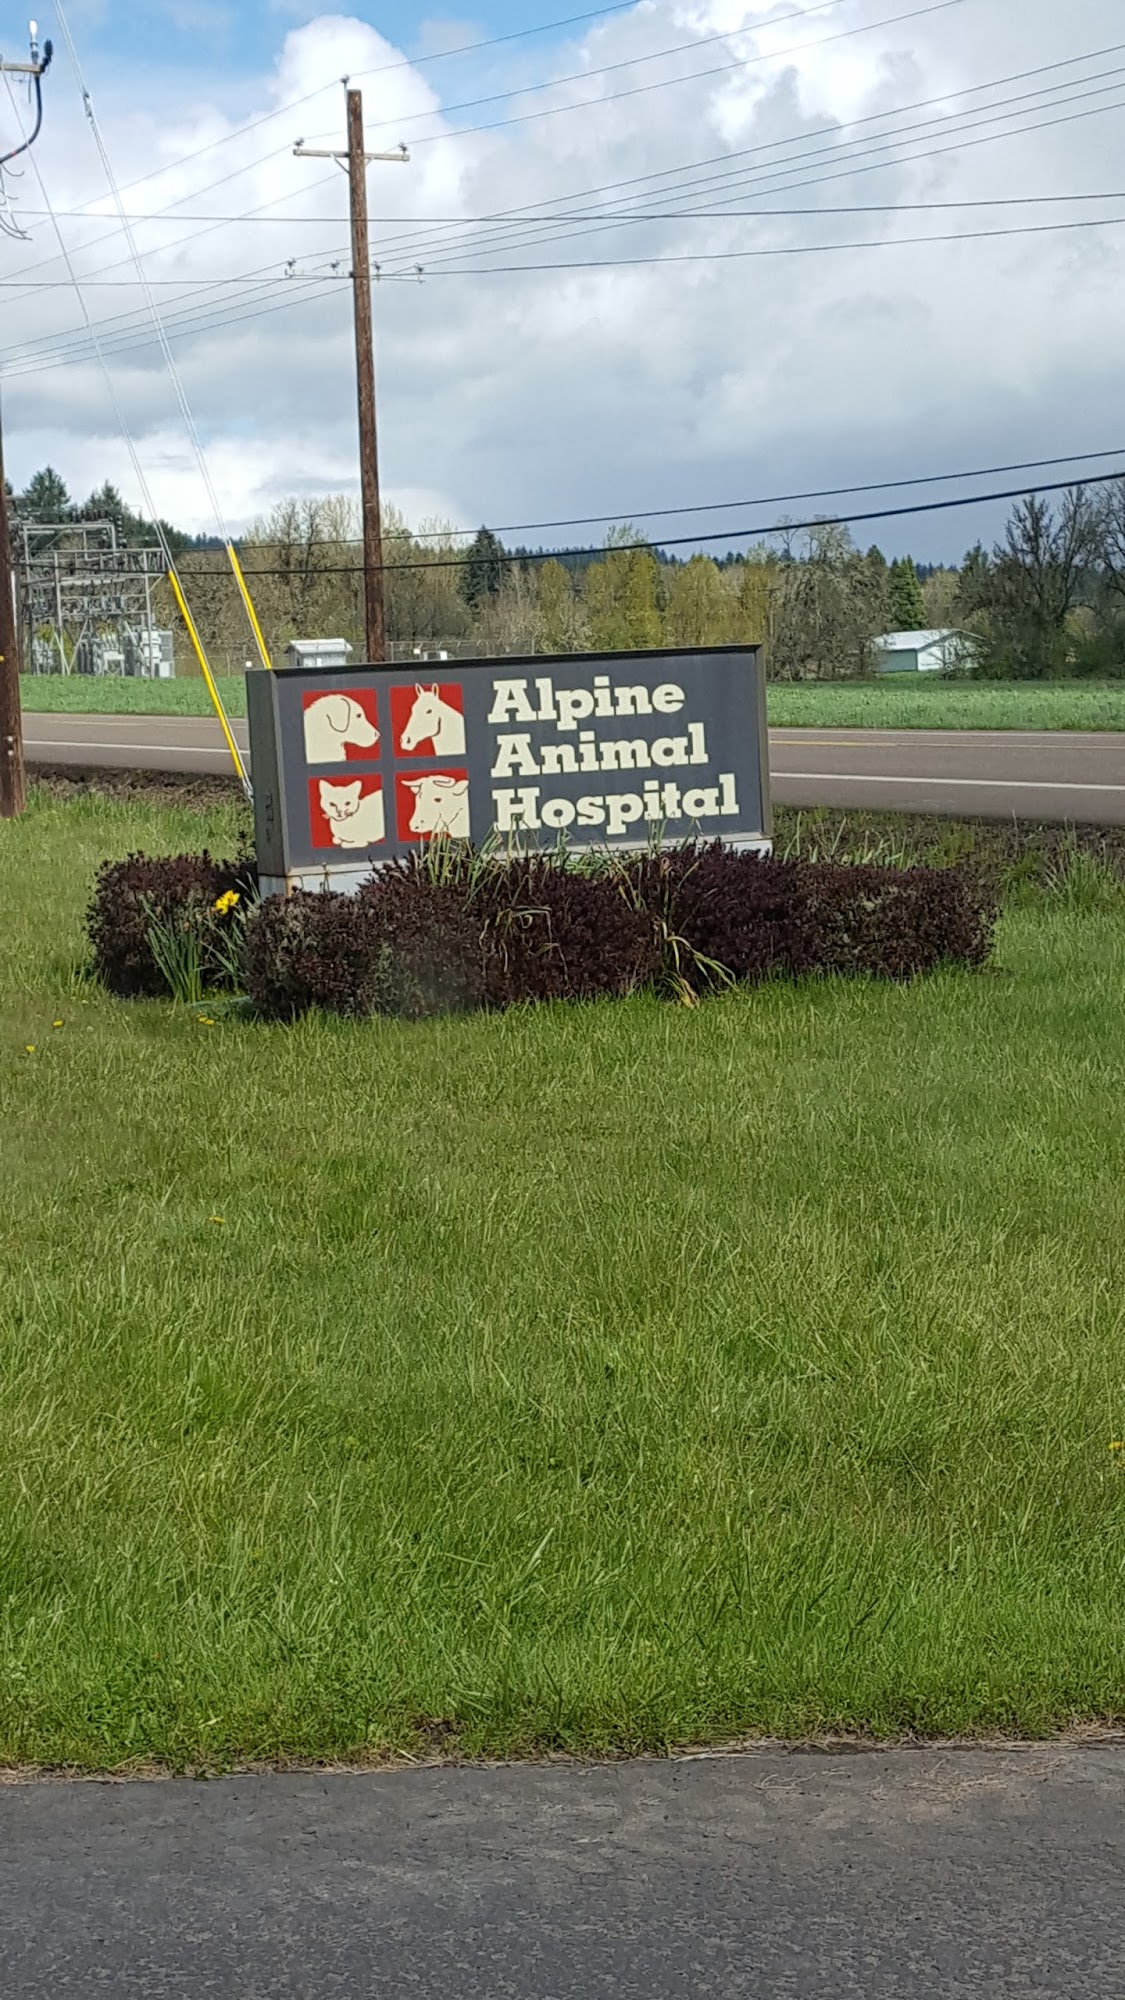 Alpine Animal Hospital PC: Clark Dale C DVM